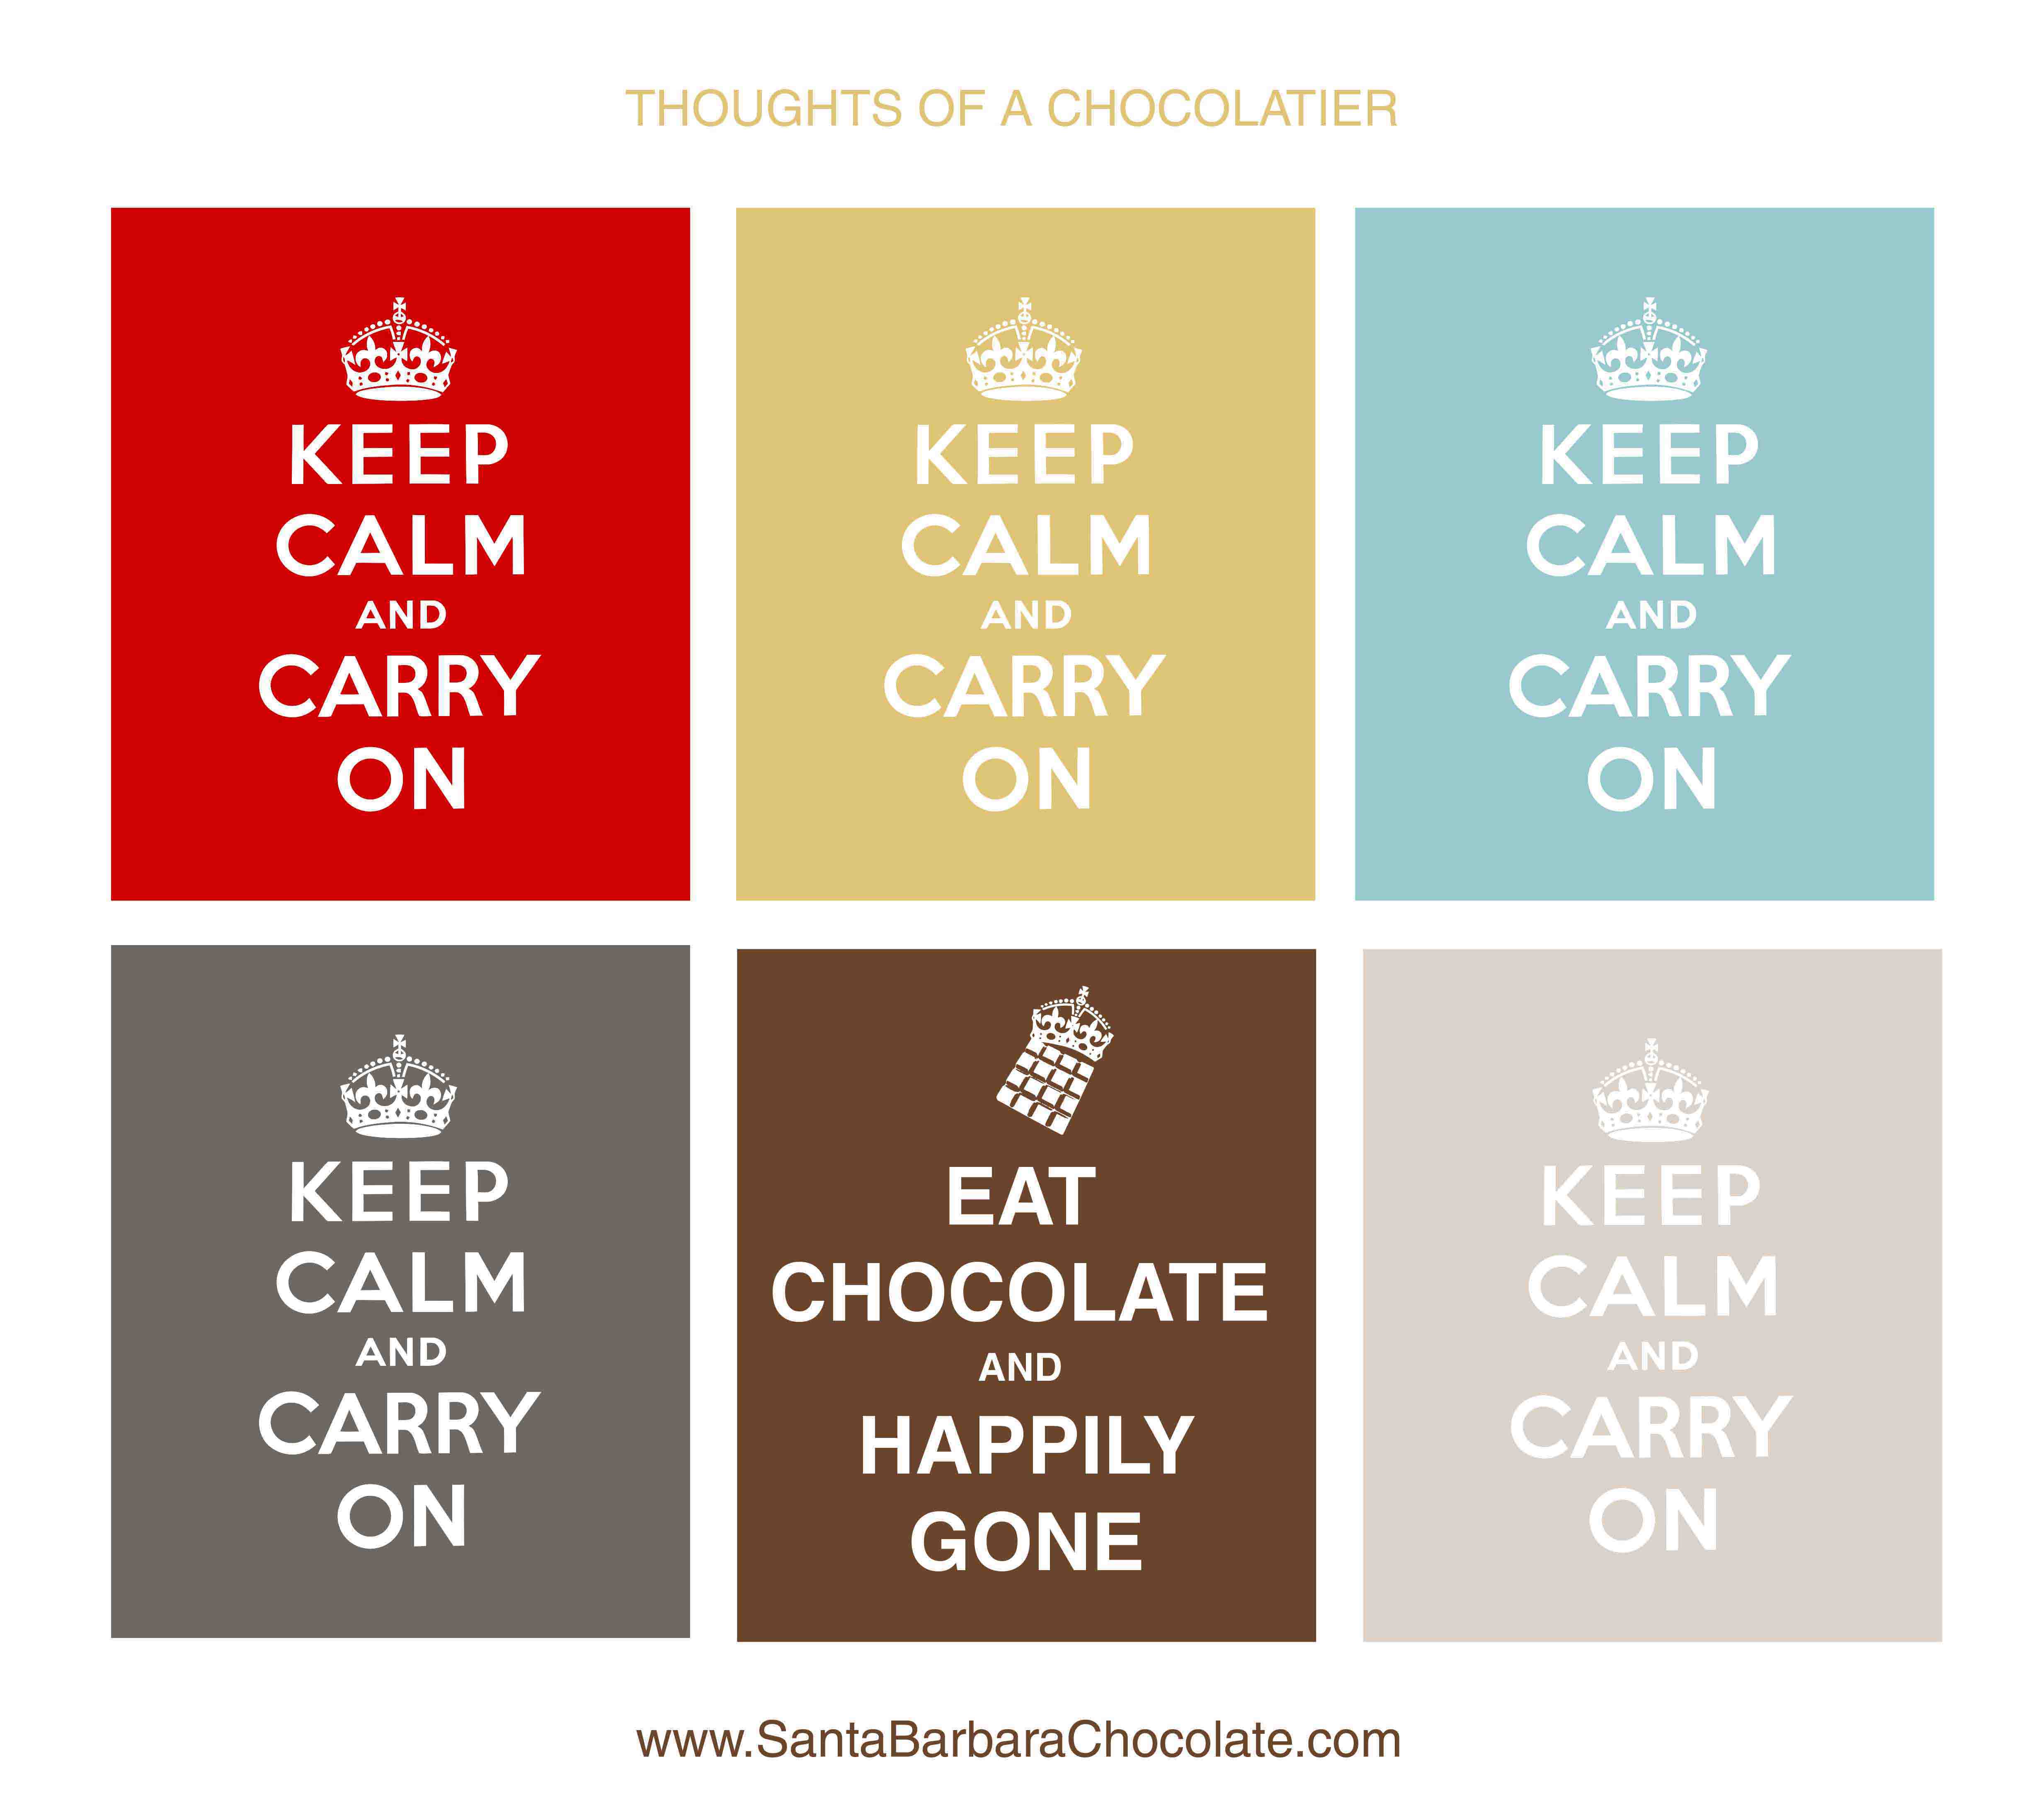 keep-calm-chocolate-gone